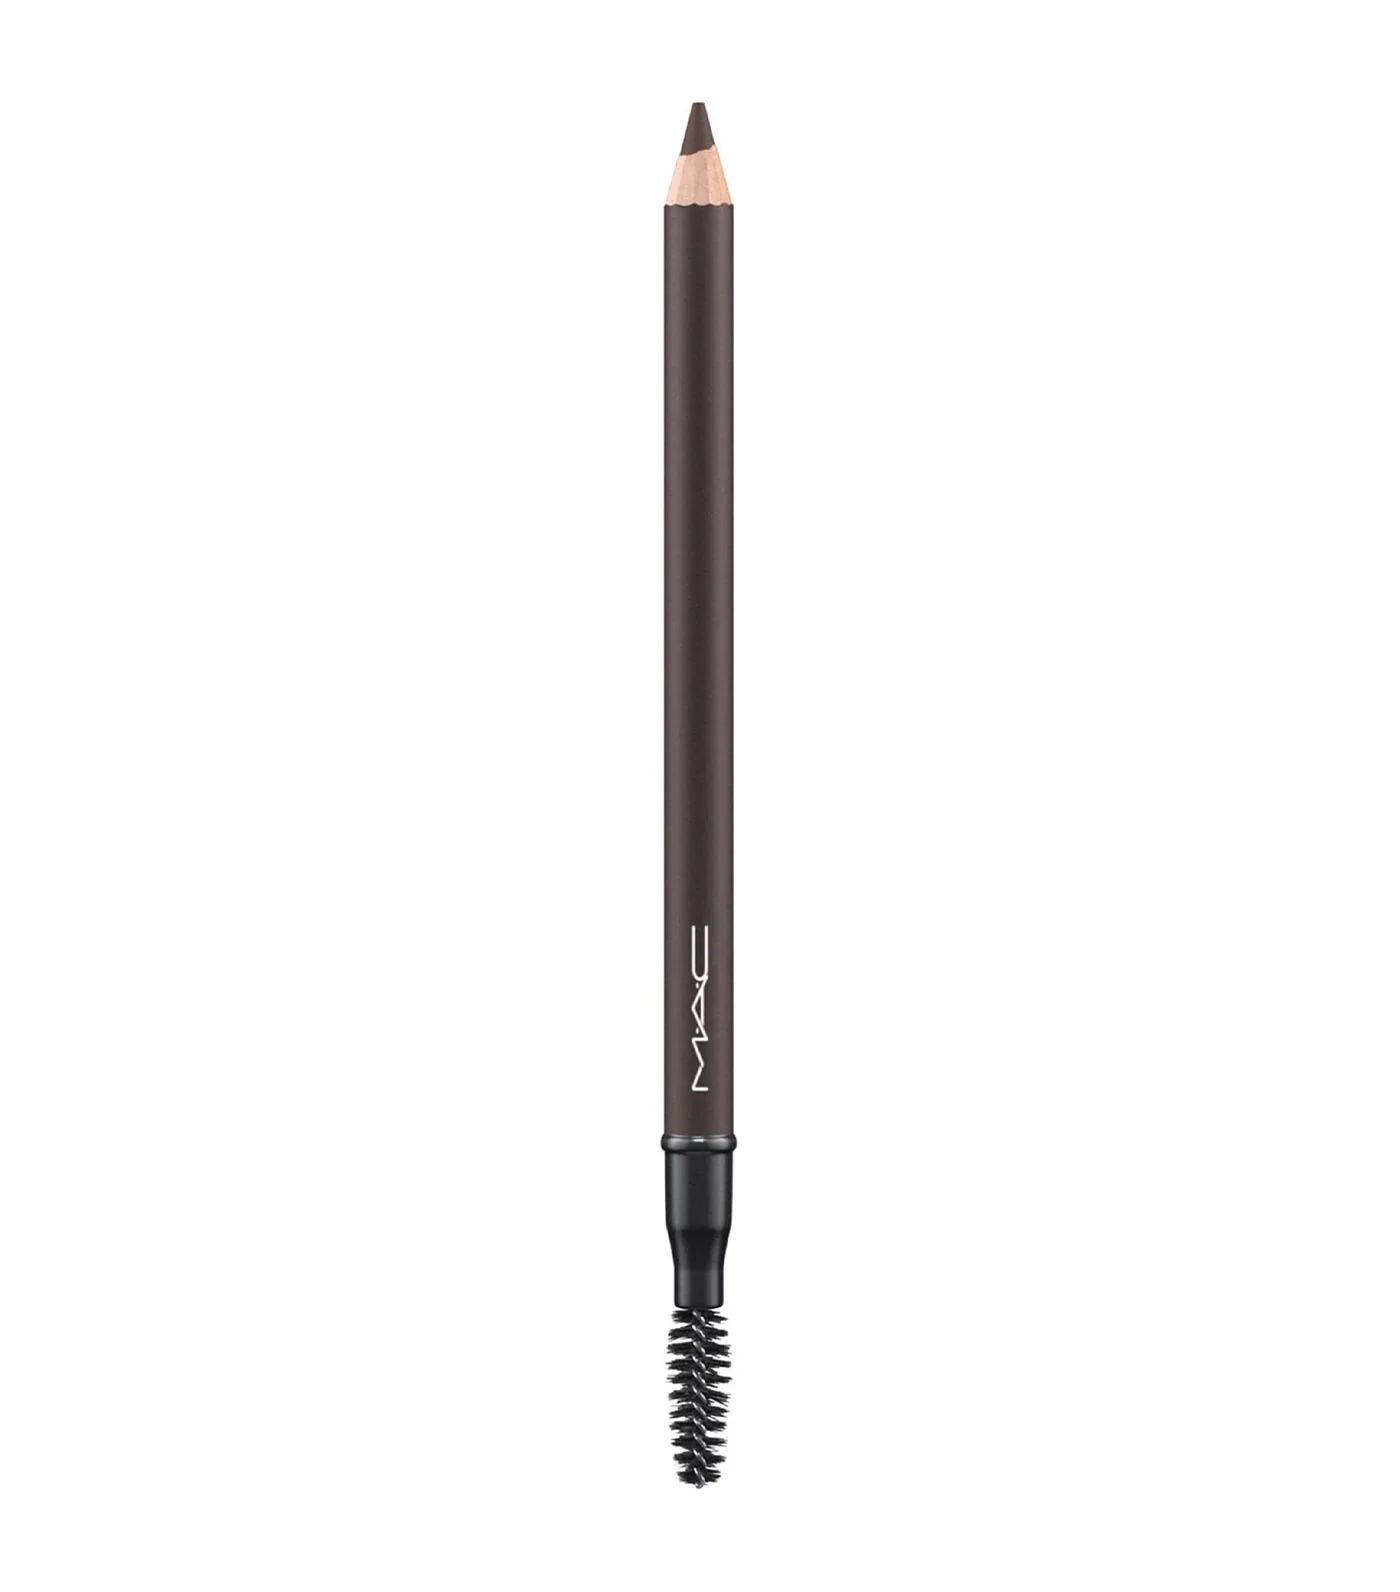 Mac карандаш для бровей Veluxe Brow Liner Omega. Eva Mosaic карандаш для бровей Анютины глазки. Карандаш Pupa Eyebrow Pencil. Eva Mosaic ideal Brow карандаш. Brow liner